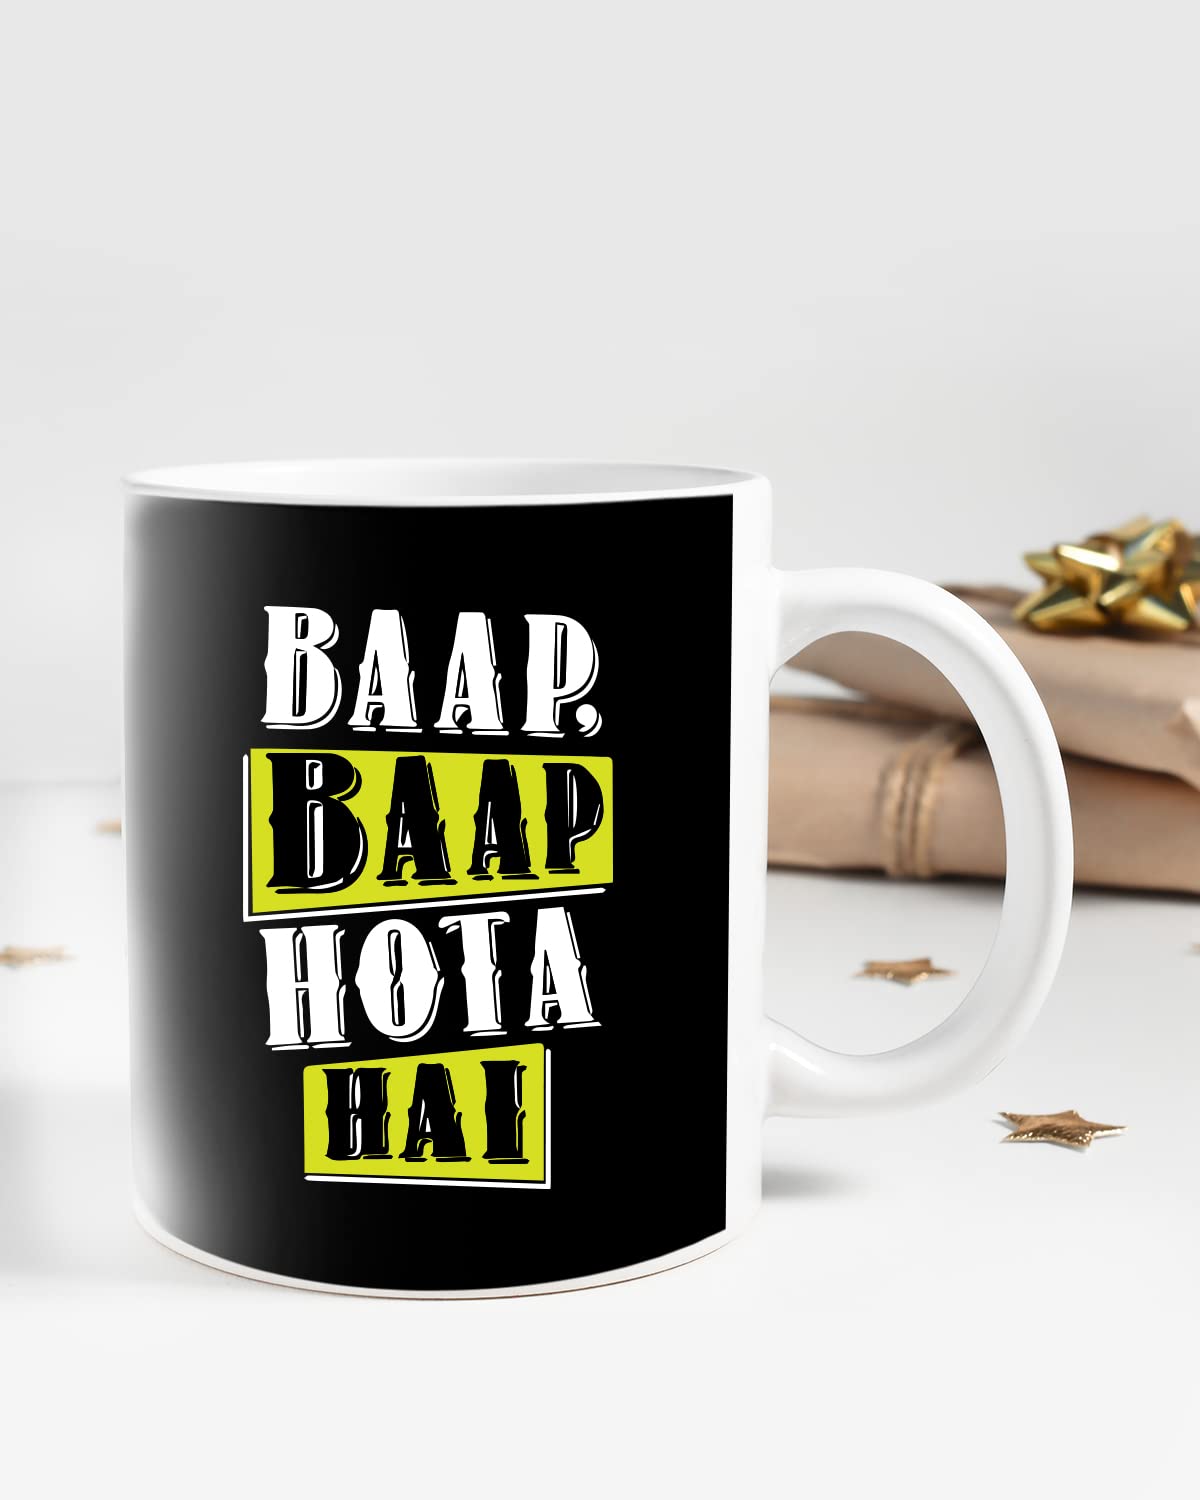 BAAP BAAP HOTA HAI Coffee Mug - Gift for Friend, Birthday Gift, Birthday Mug, Sarcasm Quotes Mug, Mugs with Funny & Funky Dialogues, Bollywood Mugs, Funny Mugs for Him & Her